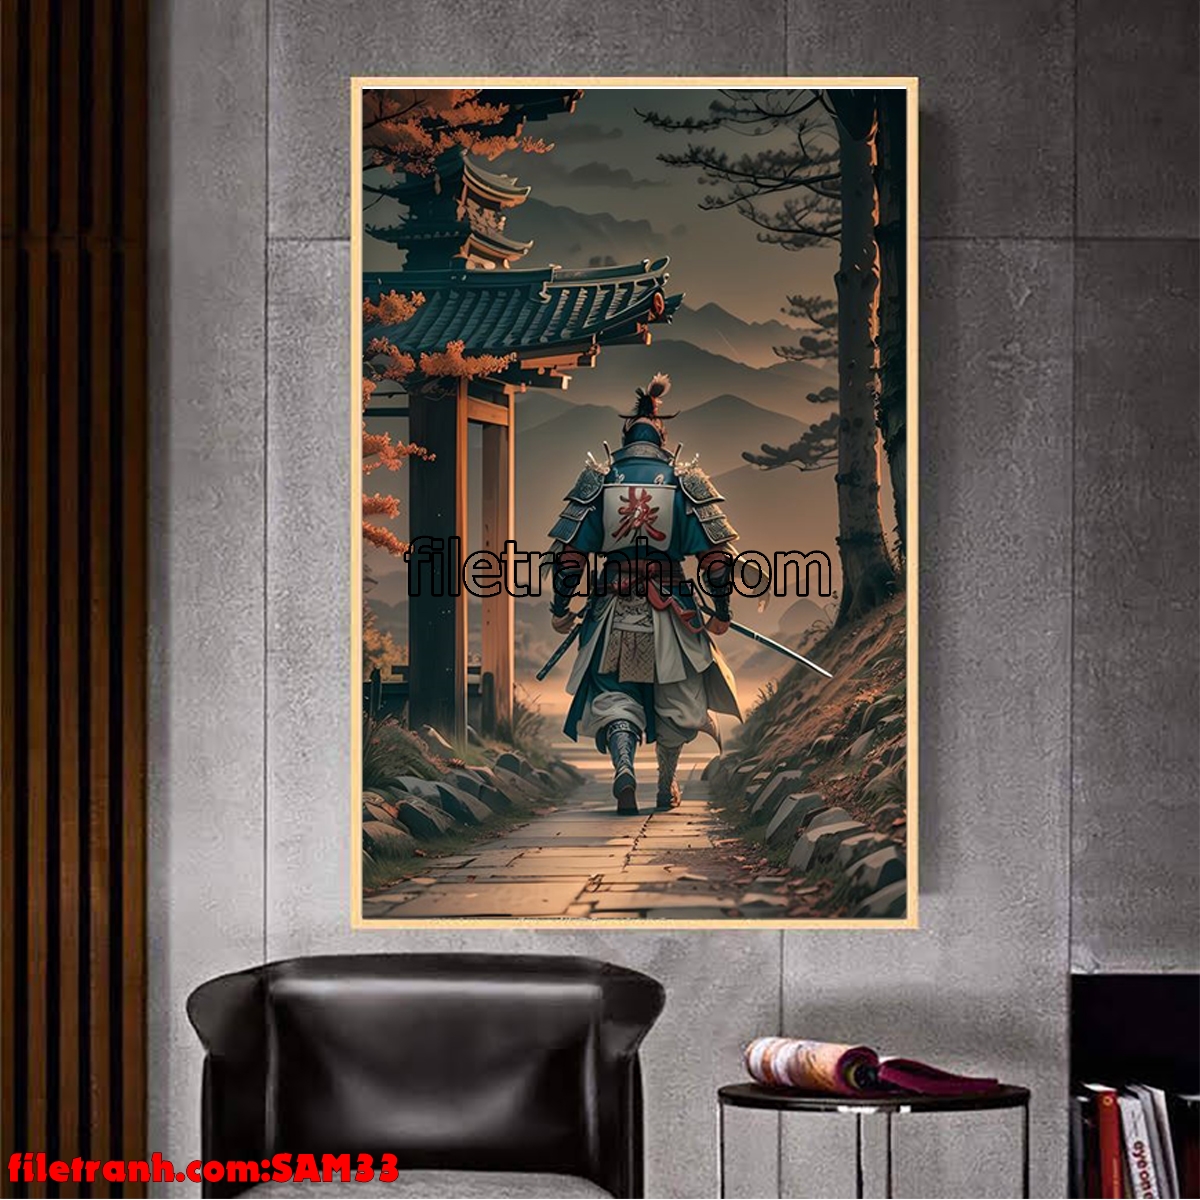 https://filetranh.com/samurai/file-tranh-samurai-vo-si-nhat-ban-sam33.html